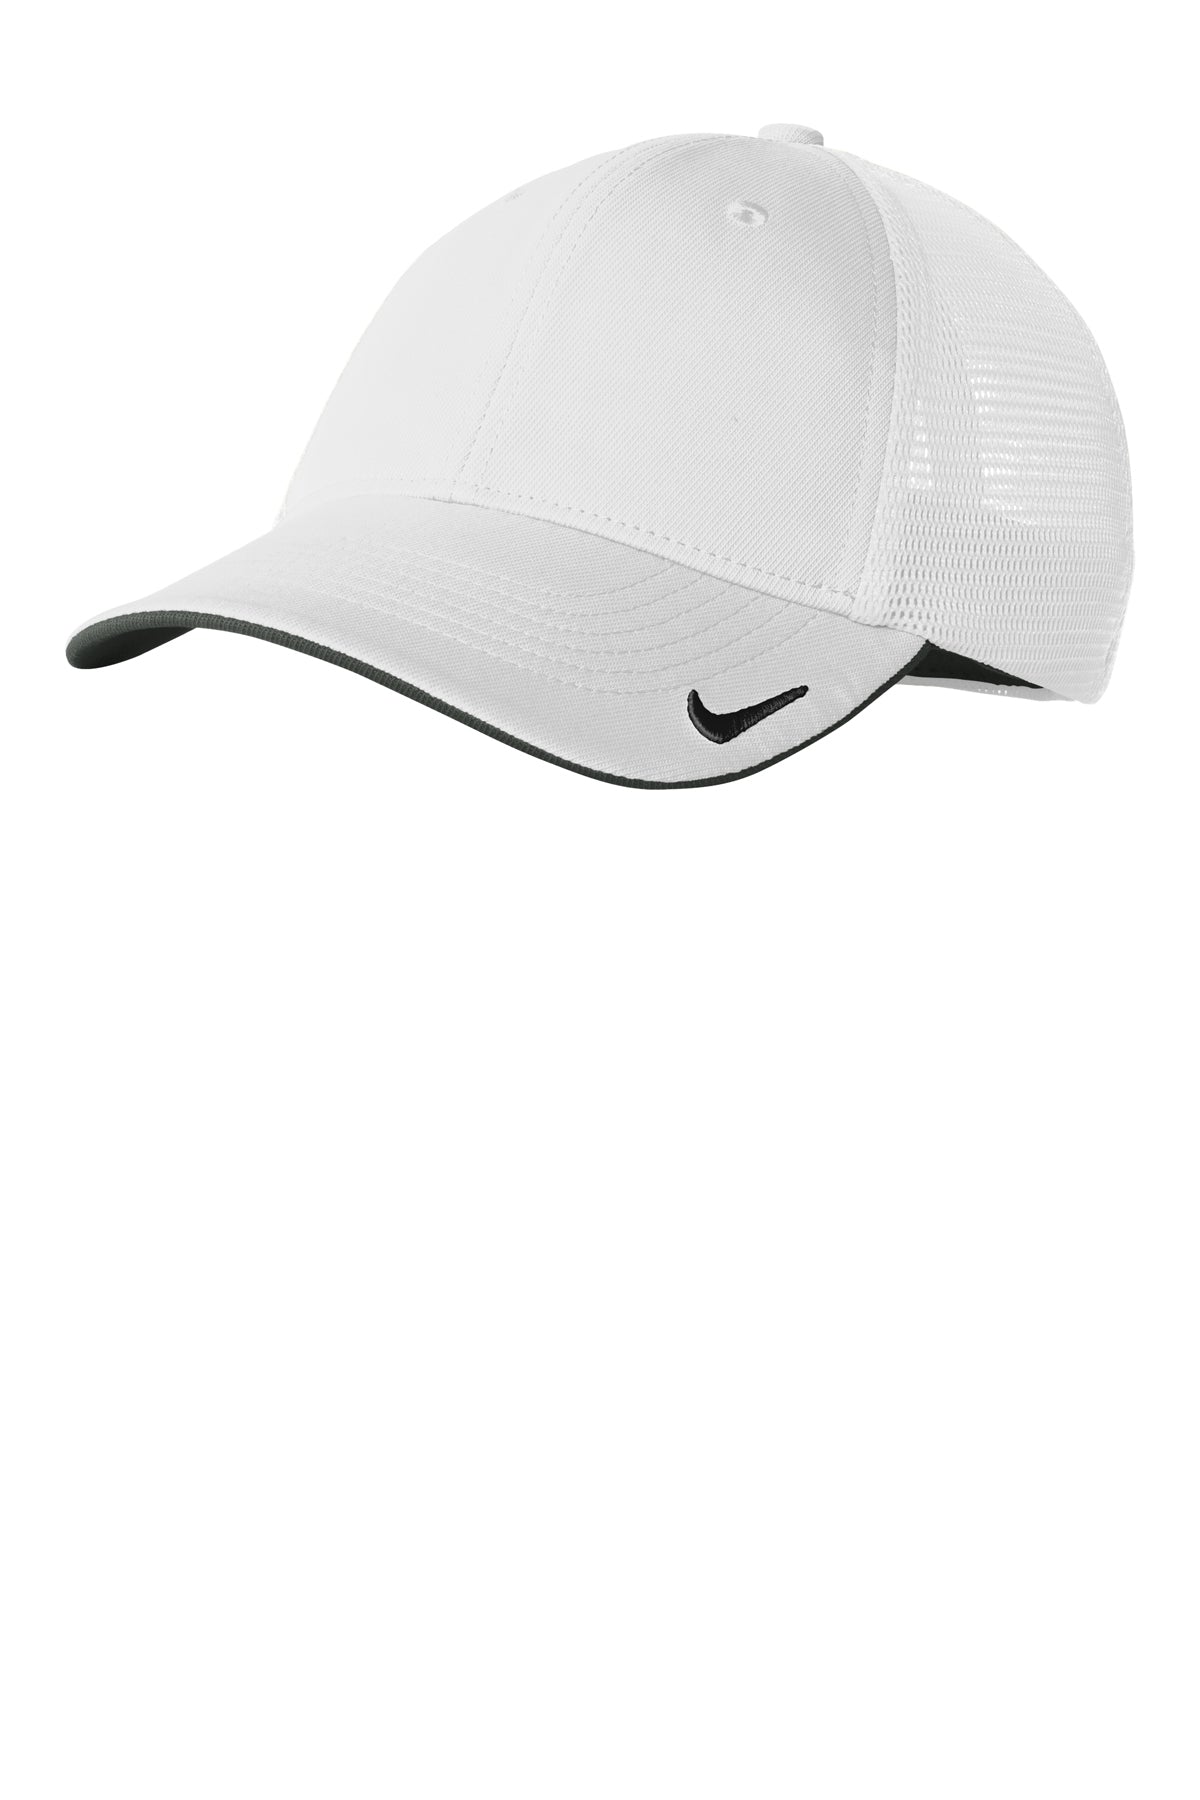 NKFB6448 Nike Stretch-to-Fit Mesh Back Cap